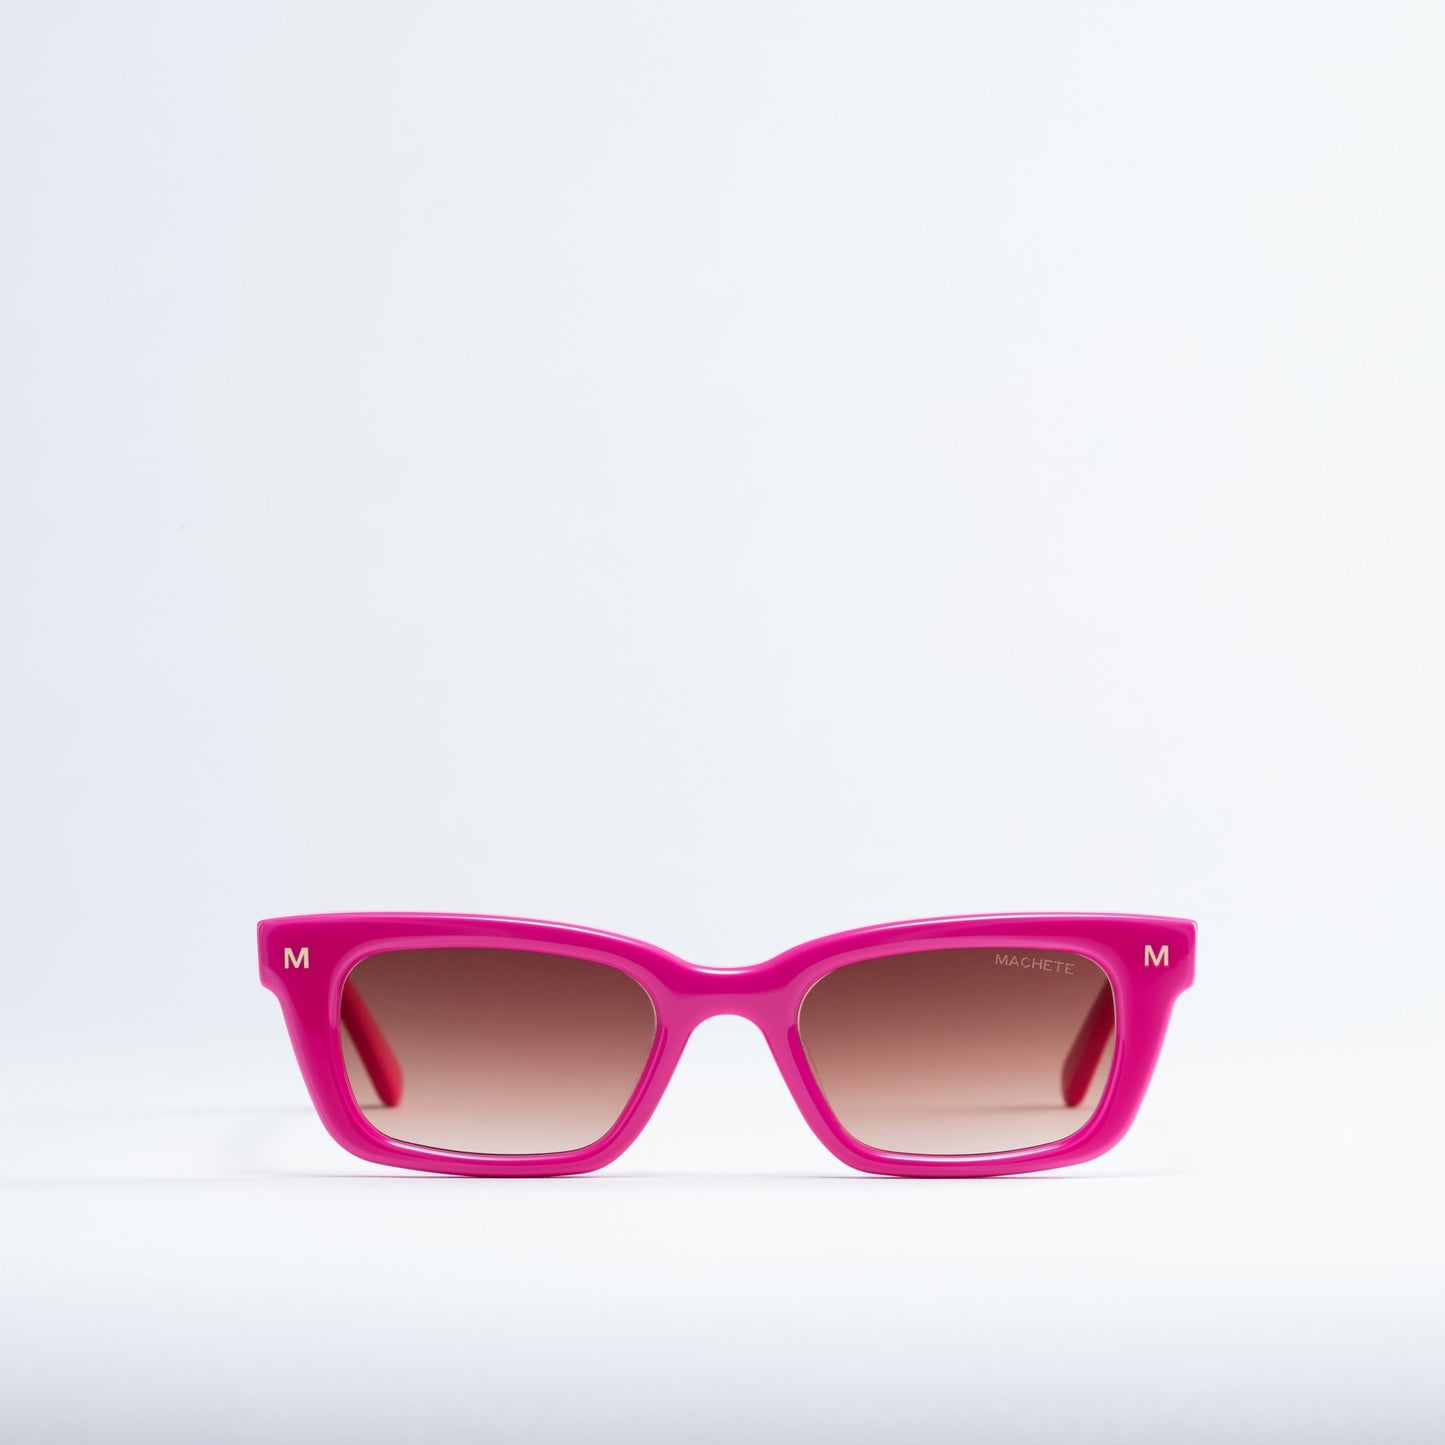 MACHETE Ruby Sunglasses in Neon Pink